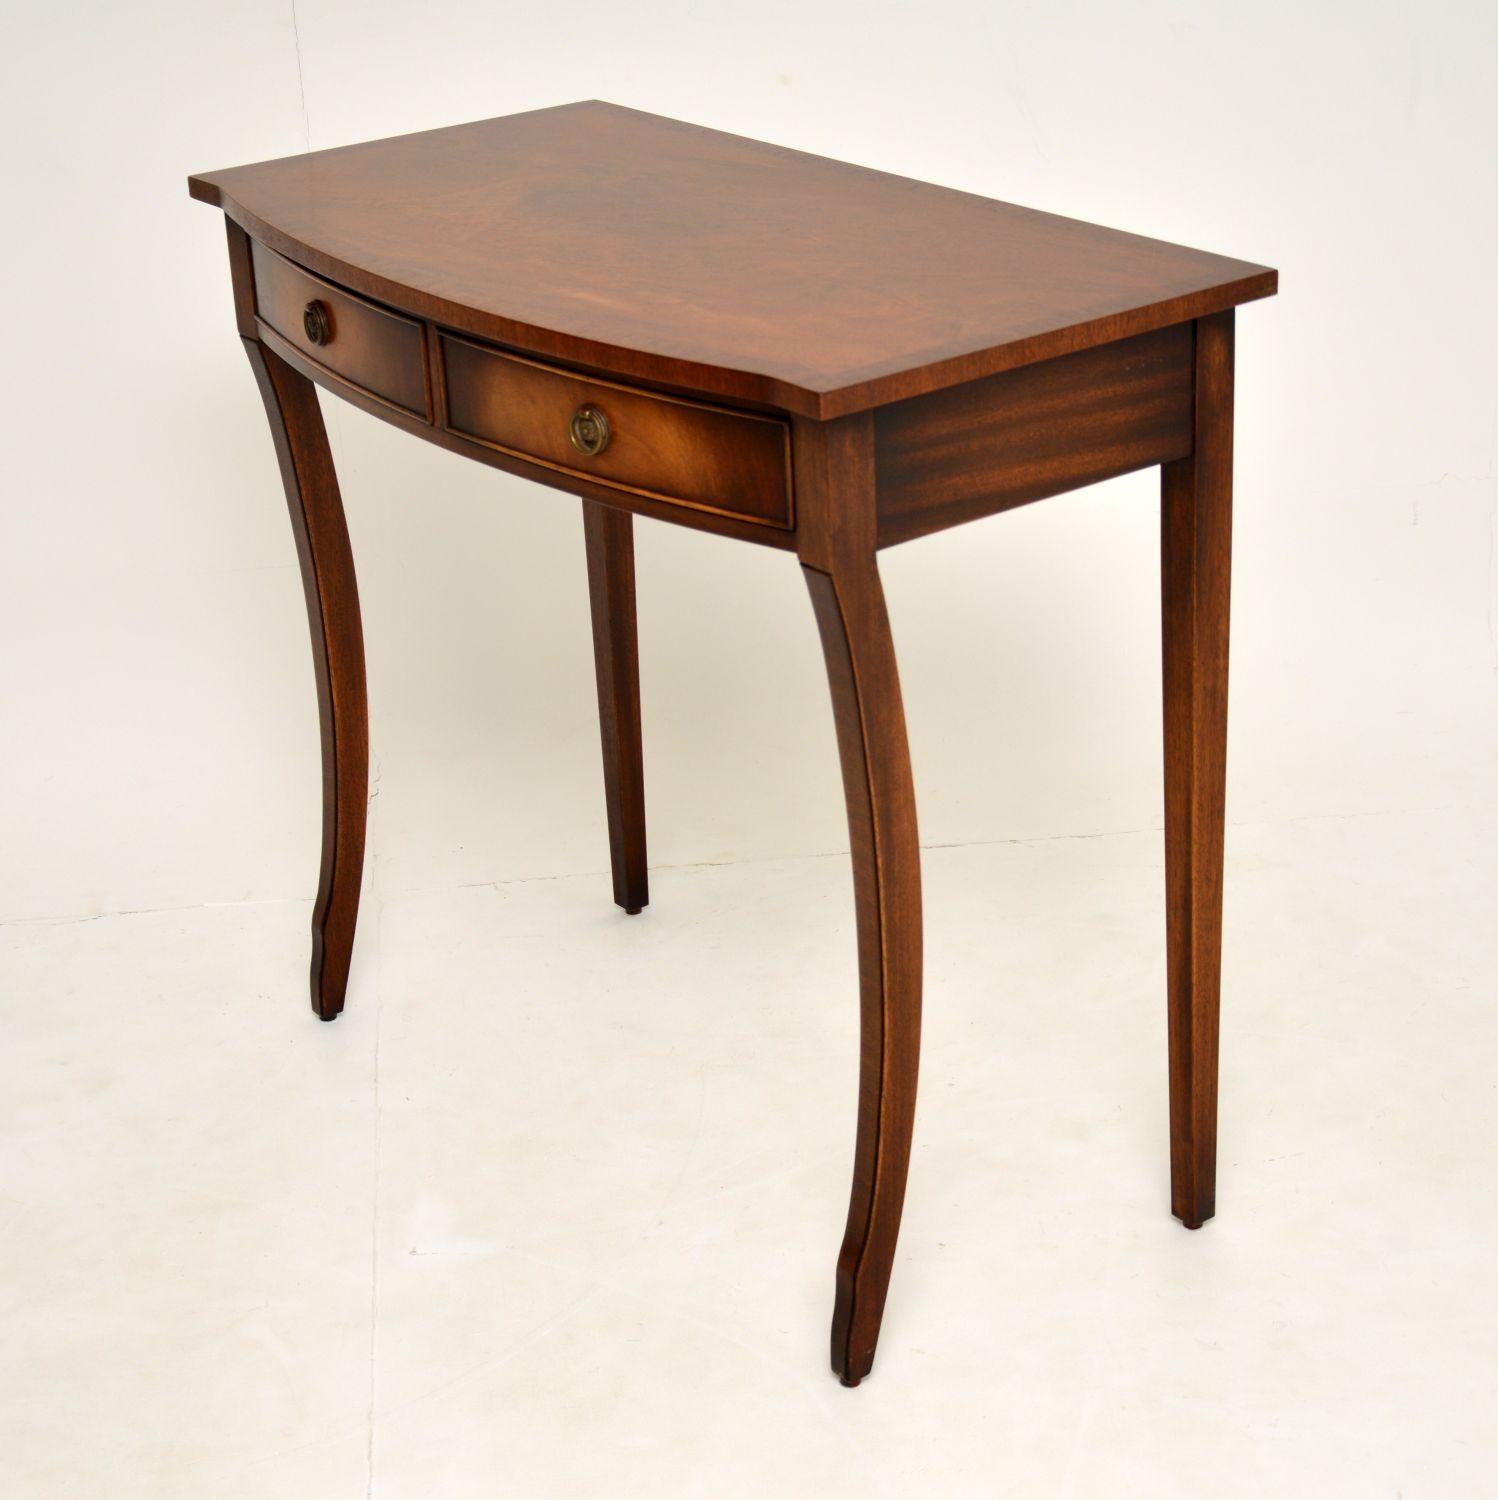 English Antique Regency Style Mahogany Console Table